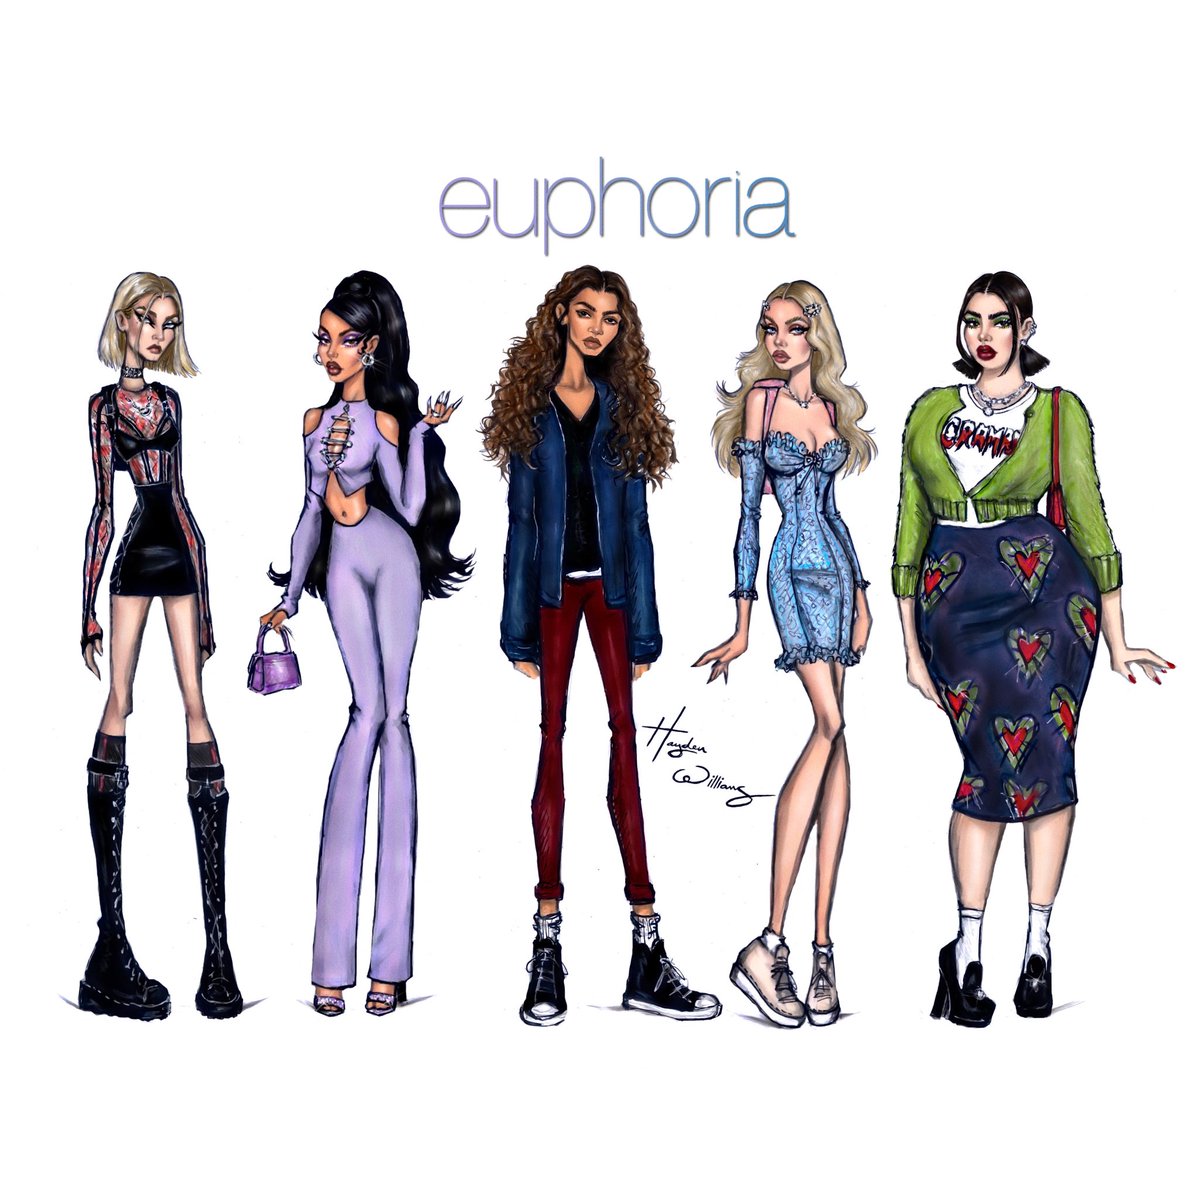 #Euphoria season 2 collection. 

Who is your fave? 💜
#Jules #Maddy #Rue #Cassie #Kat #HunterSchafer #AlexaDemie #Zendaya #SydneySweeney #BarbieFerreira #EuphoriaMakeup #EuphoriaEdit #HBO @HBO @Zendaya 
@euphoriaHBO 
instagram.com/p/CYcKIfhs8fN/